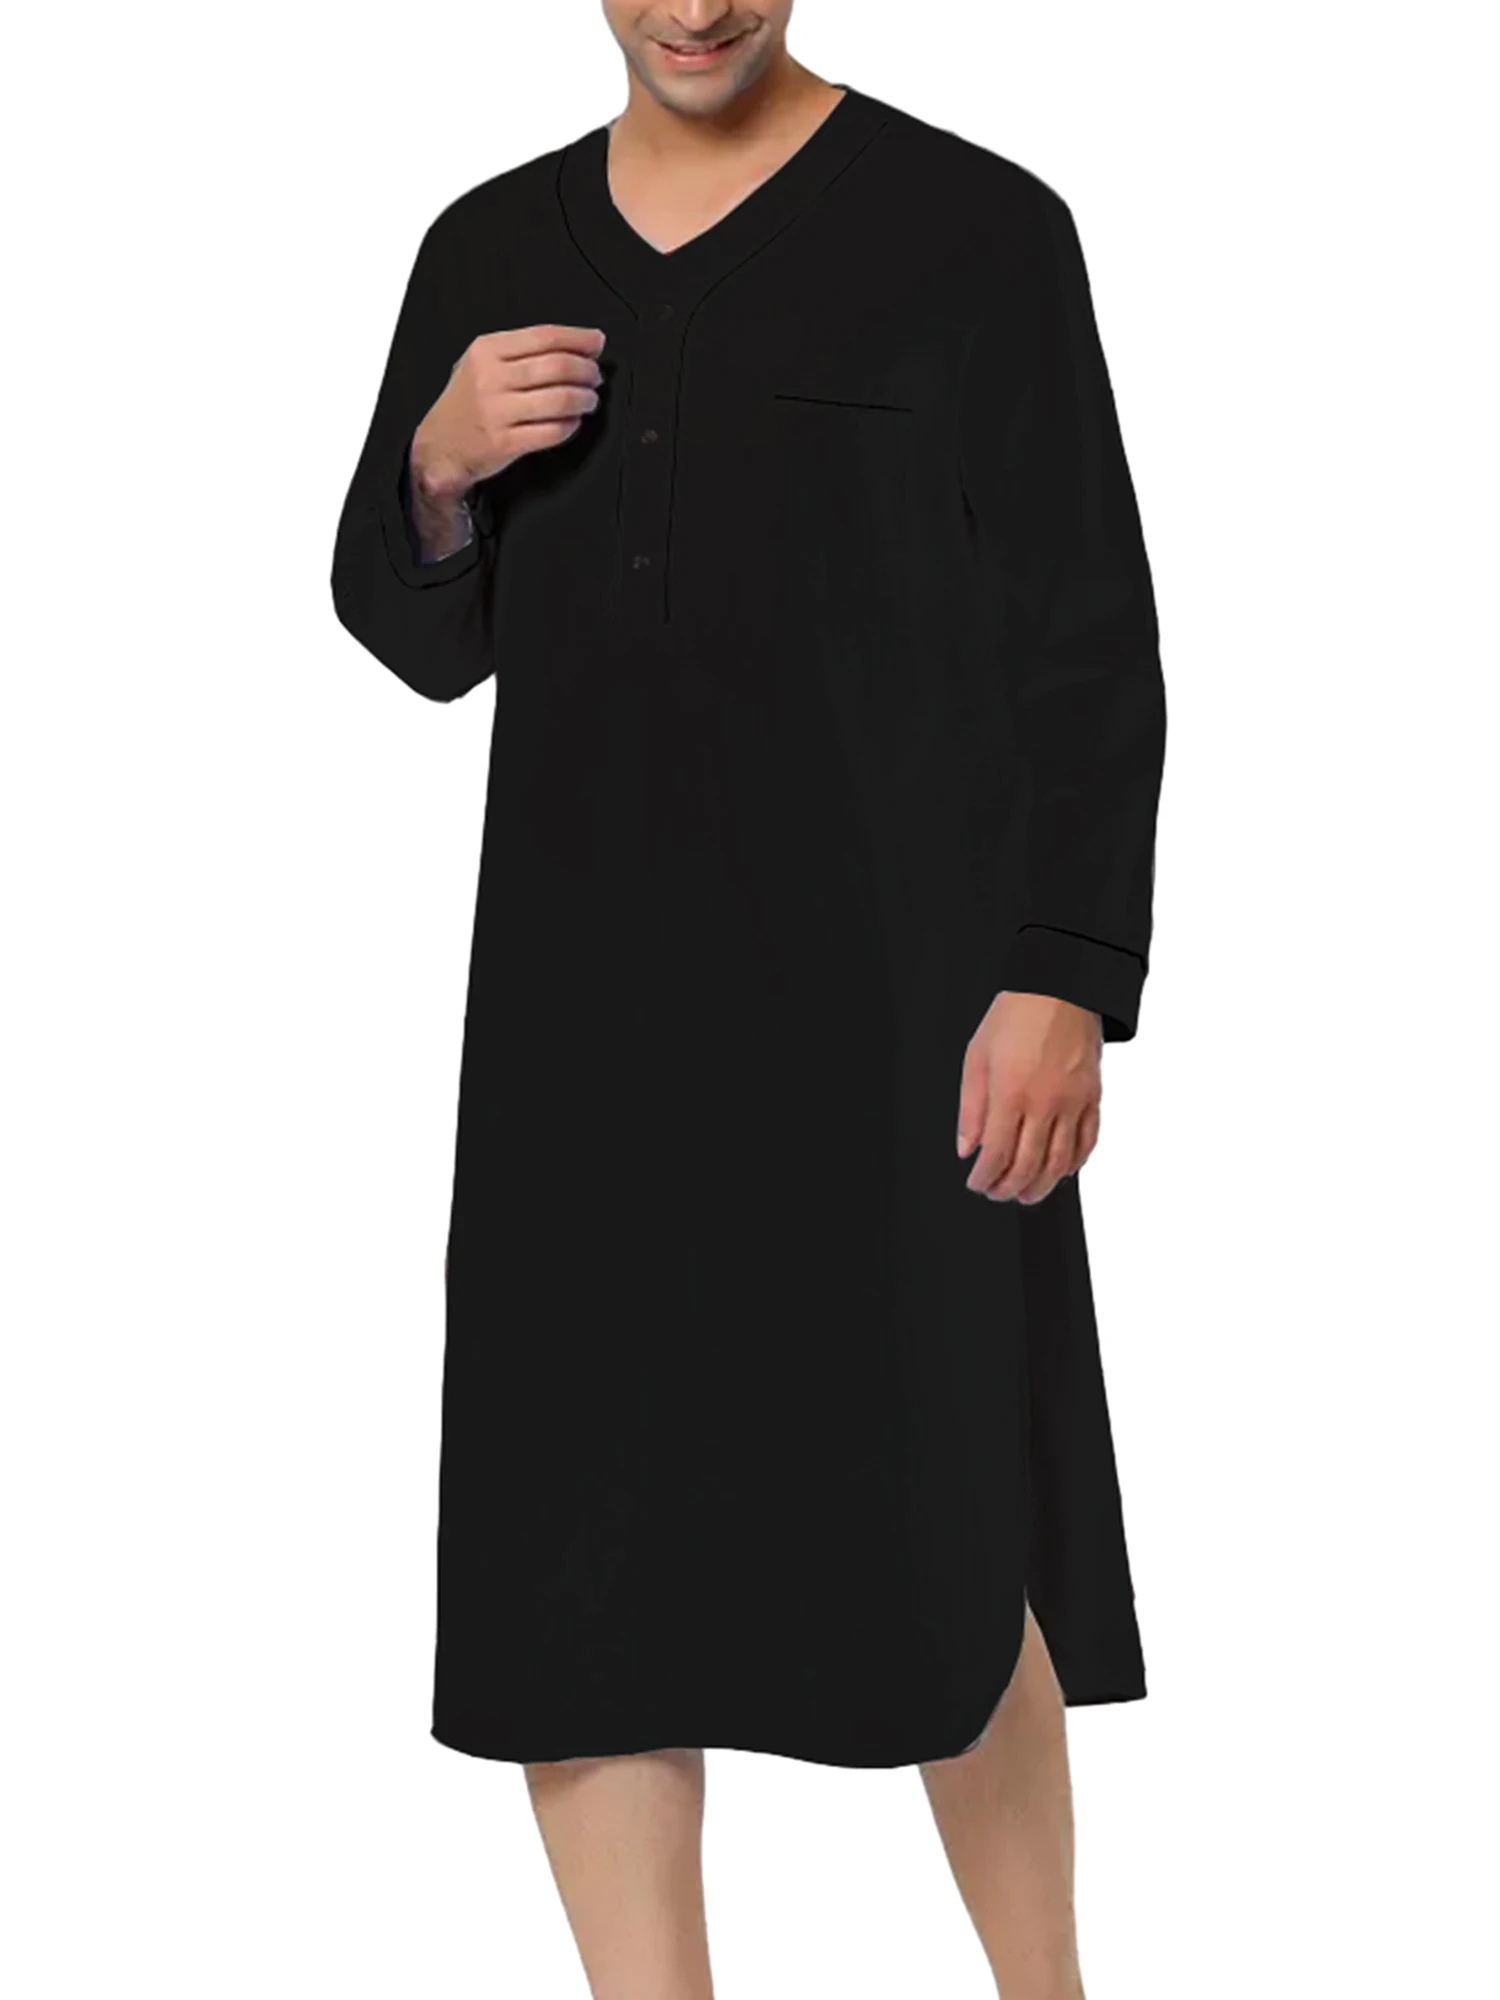 

Men s Nightshirt Sleepwear Casual Comfy Long-Sleeve V Neck Henley Sleep Shirt Loungewear with Pocket (A-Grey M)